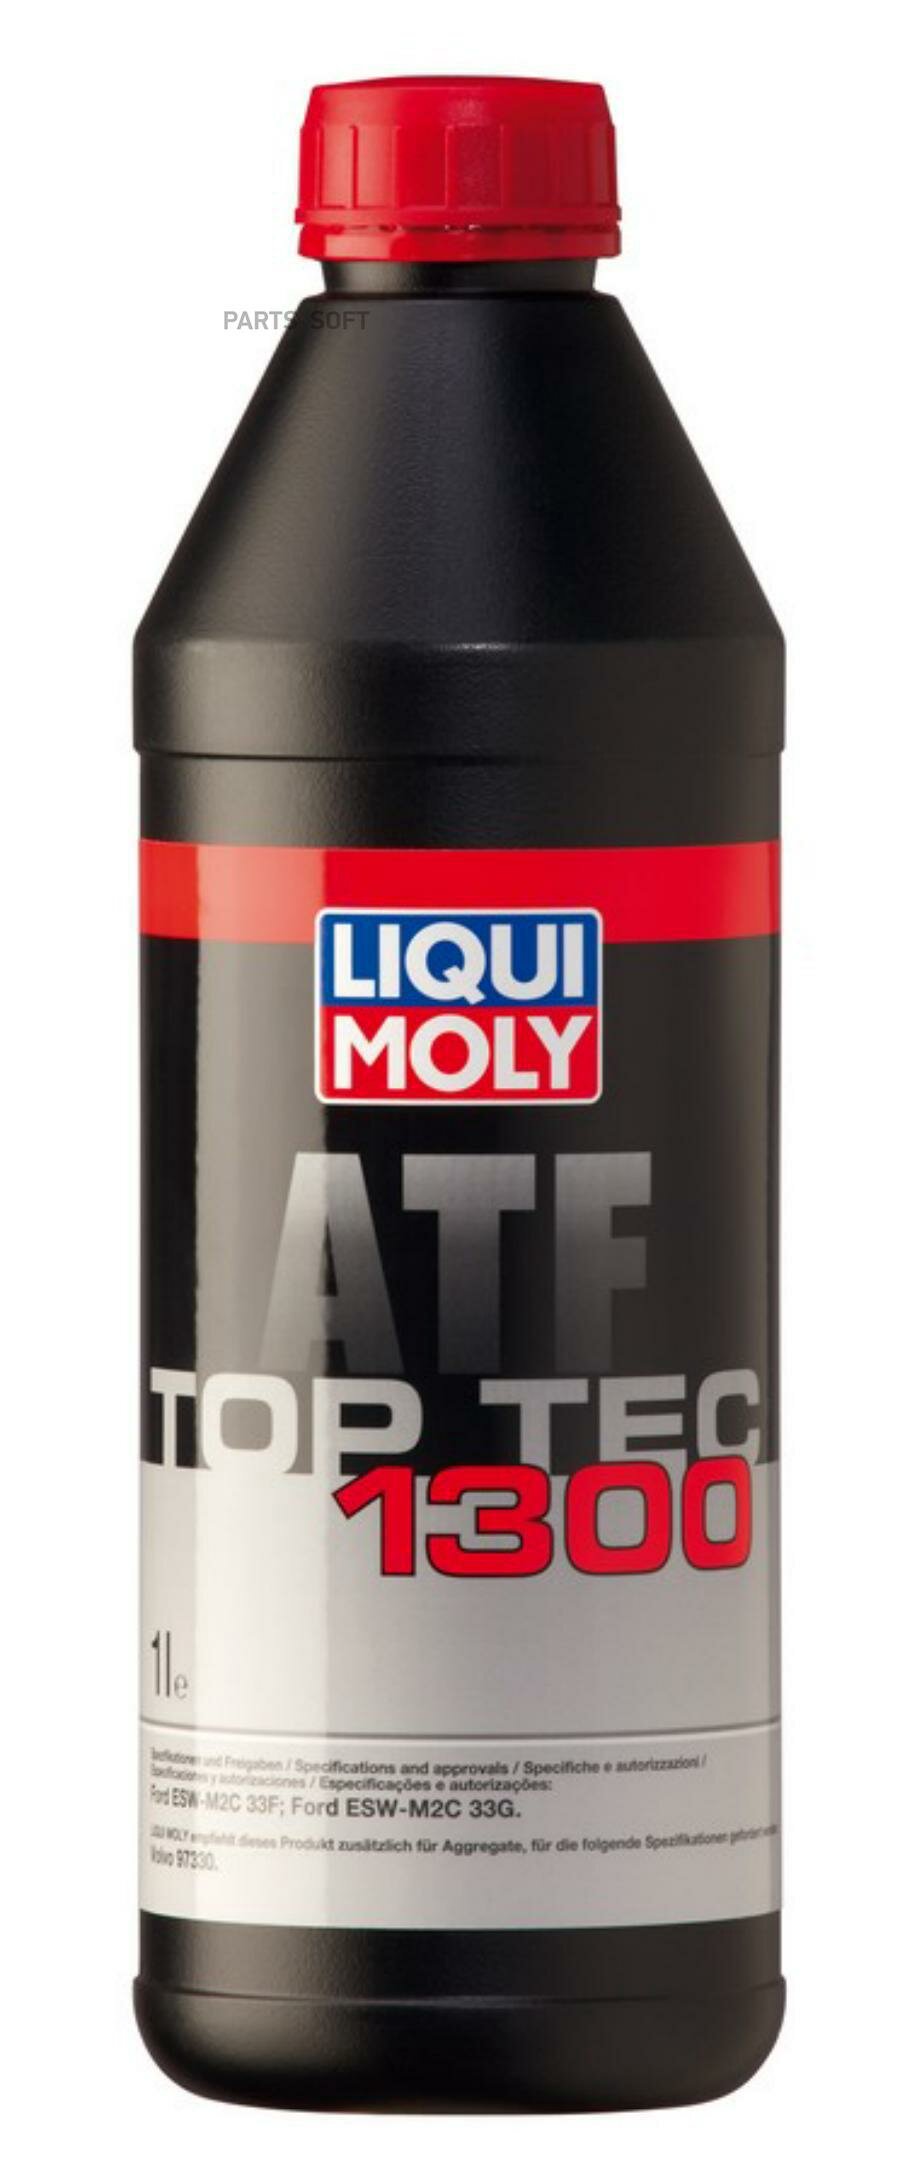 Масло для АКПП Top Tec ATF 1300 (1L) LIQUI MOLY / арт. 3691 - (1 шт)